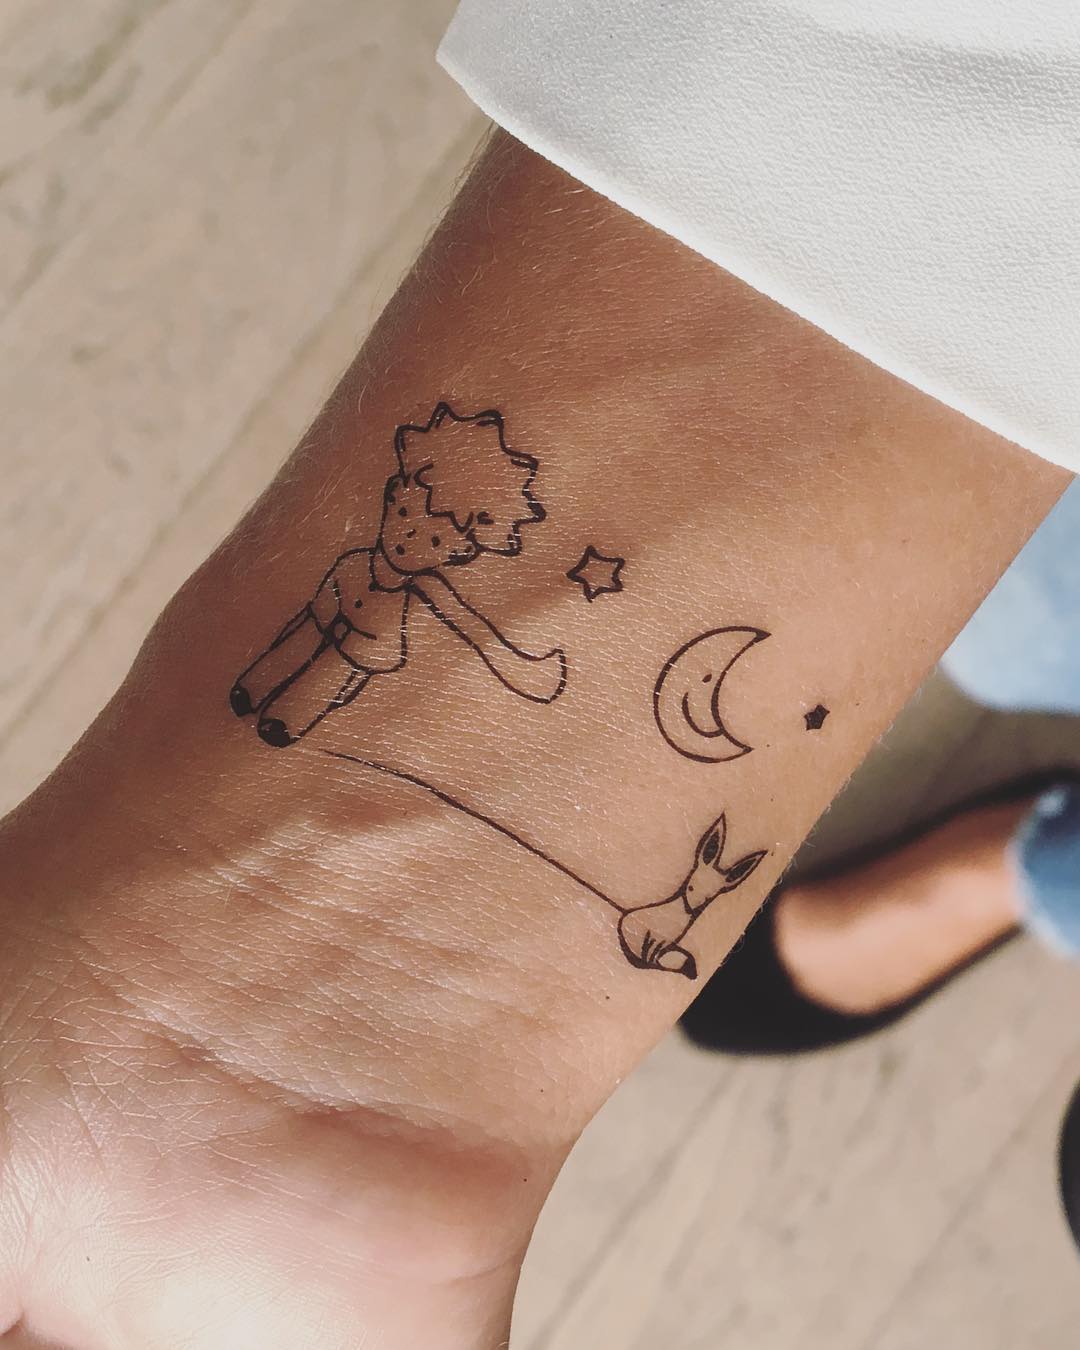 fake small little prince illustrative temporary tattoo sticker design idea on wrist